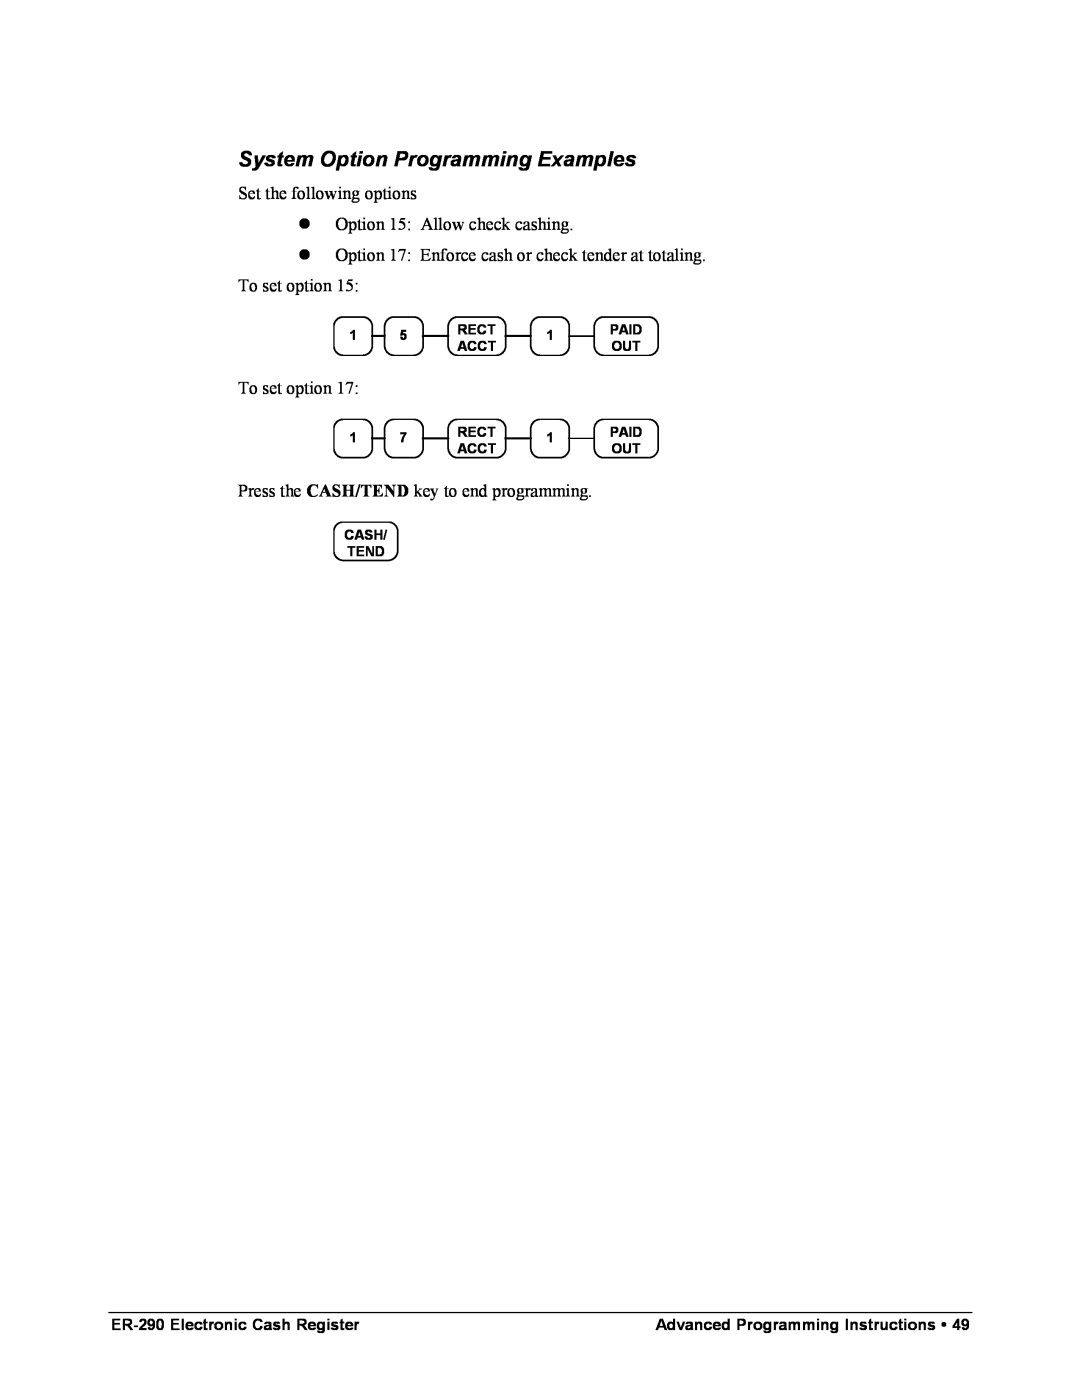 Samsung M-ER290 System Option Programming Examples, ER-290 Electronic Cash Register, Advanced Programming Instructions 